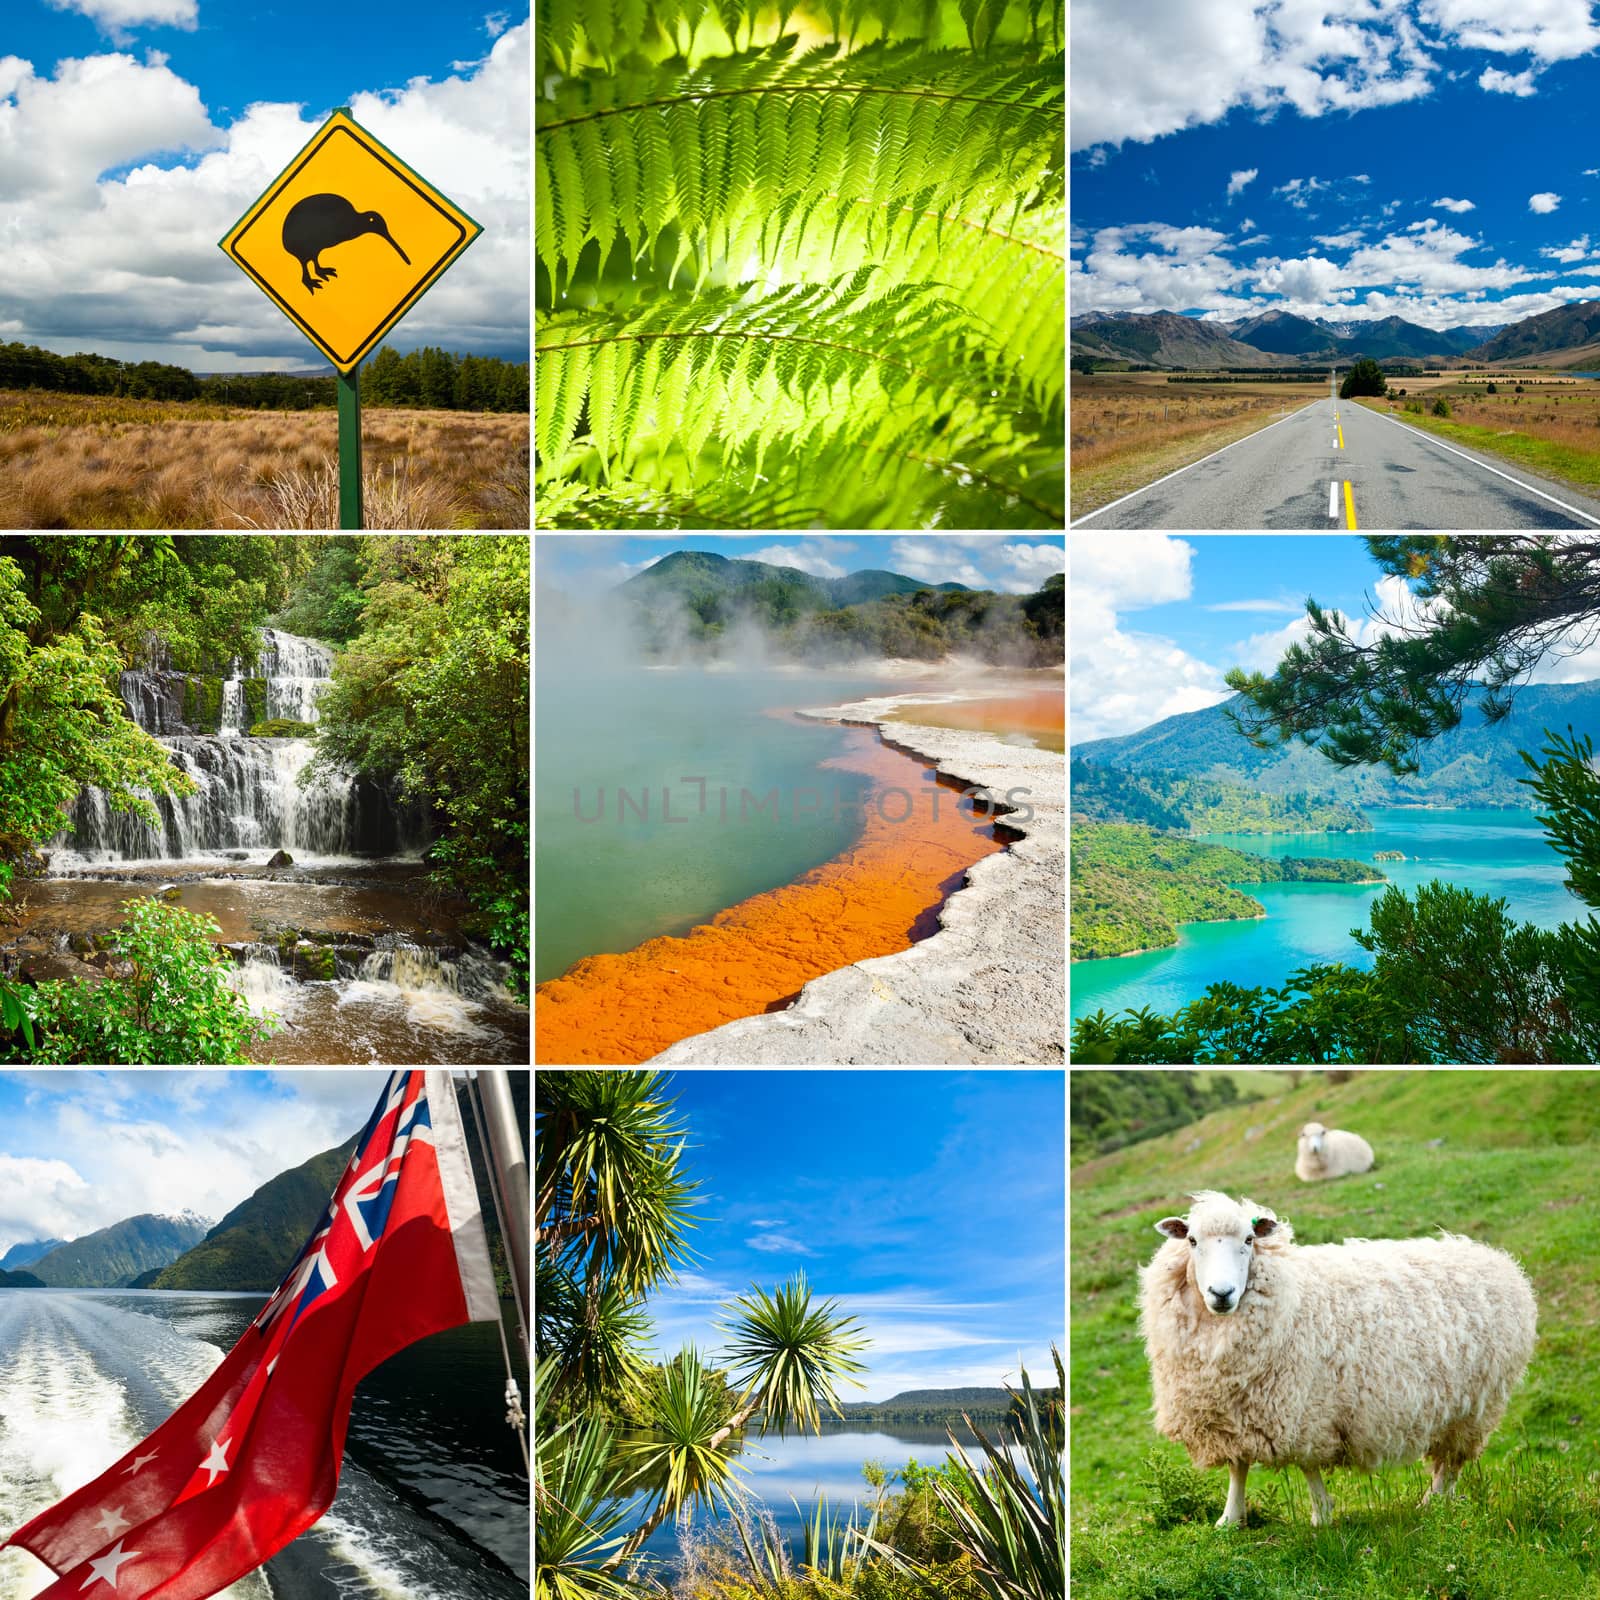 New Zealand set with Kiwi sign, fern and sheep